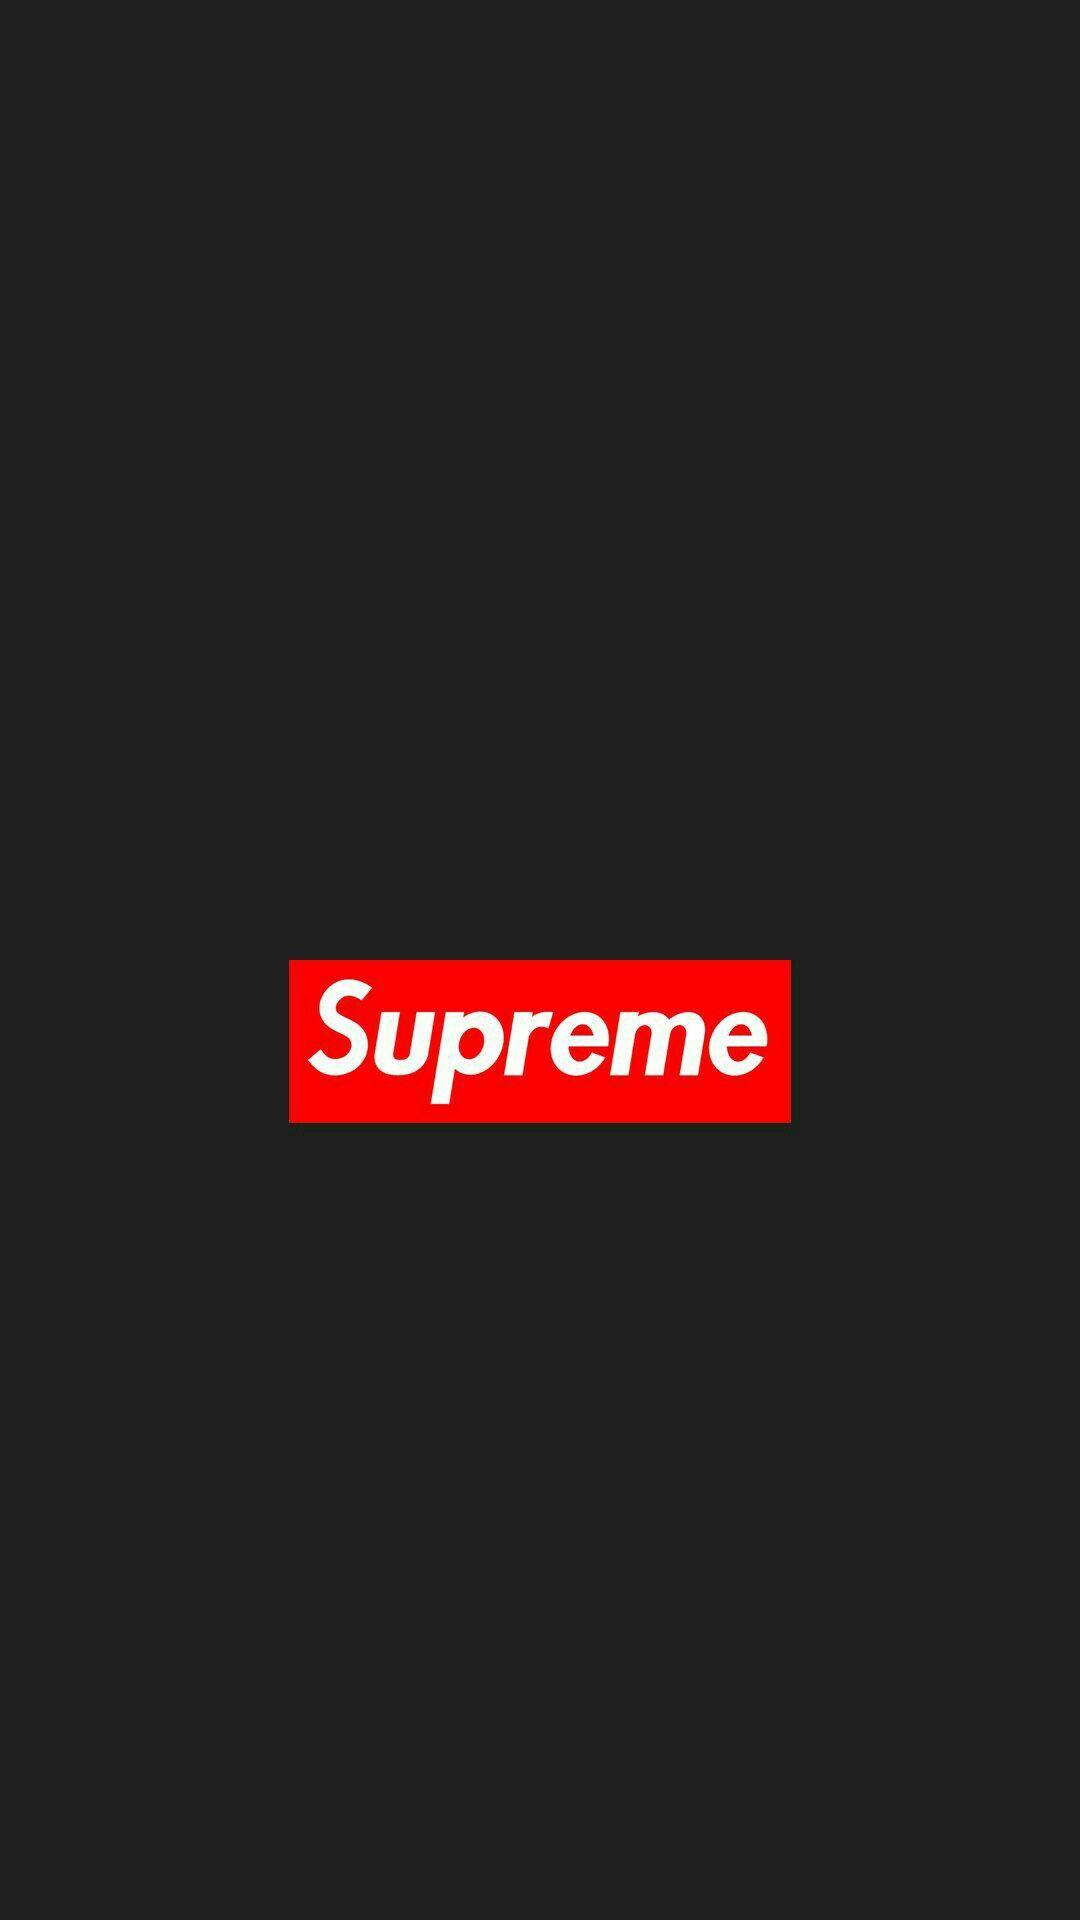 Cute Supreme Logo - LogoDix